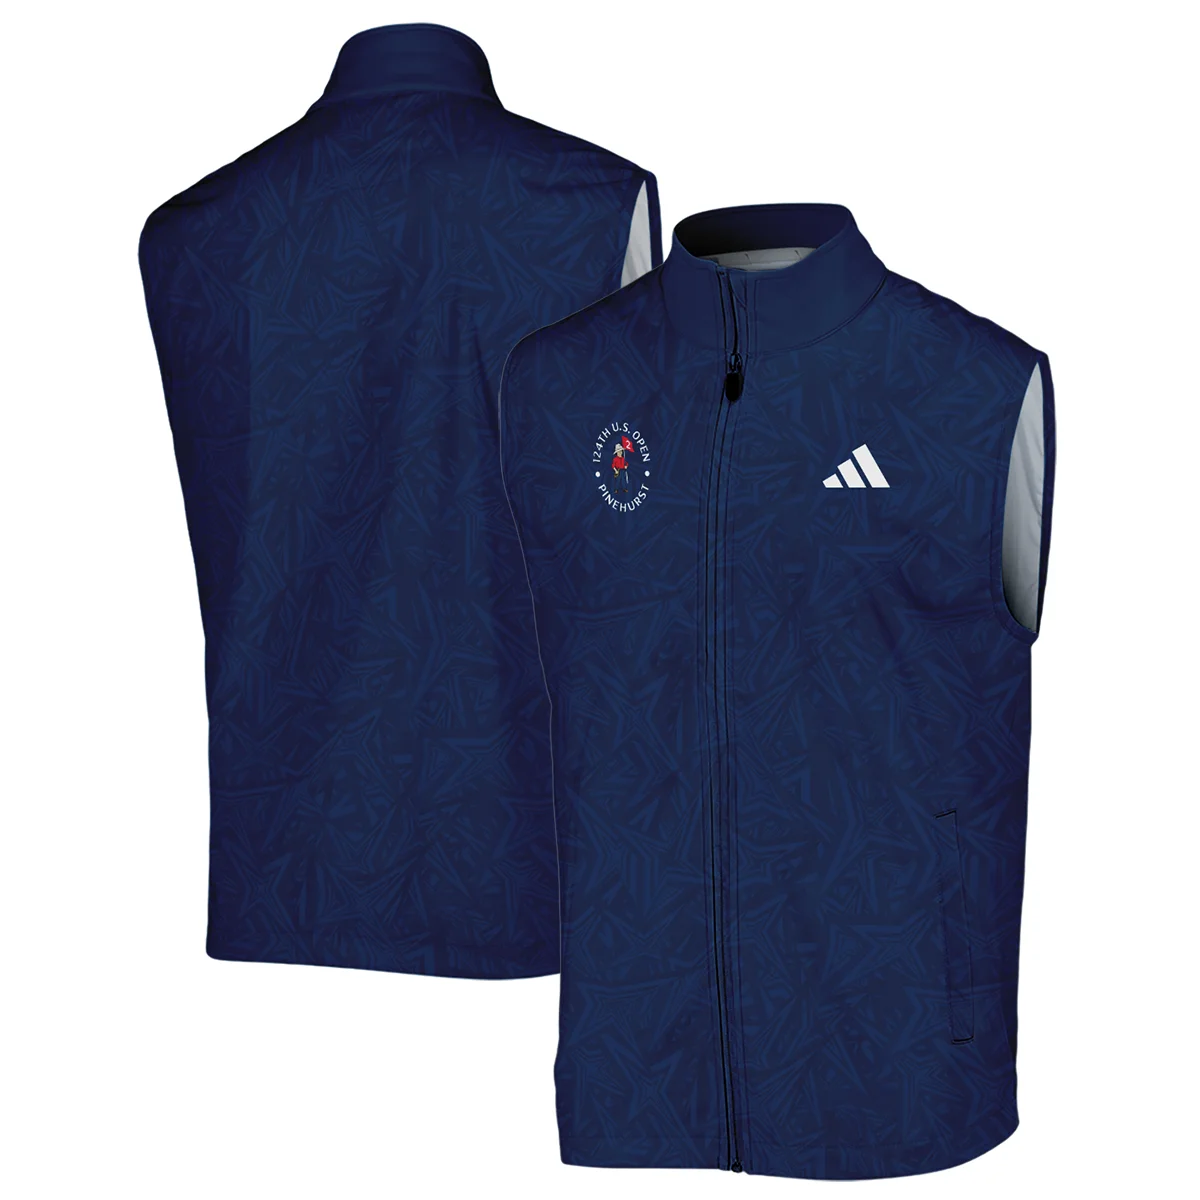 Adidas 124th U.S. Open Pinehurst Stars Gradient Pattern Dark Blue Unisex T-Shirt Style Classic T-Shirt